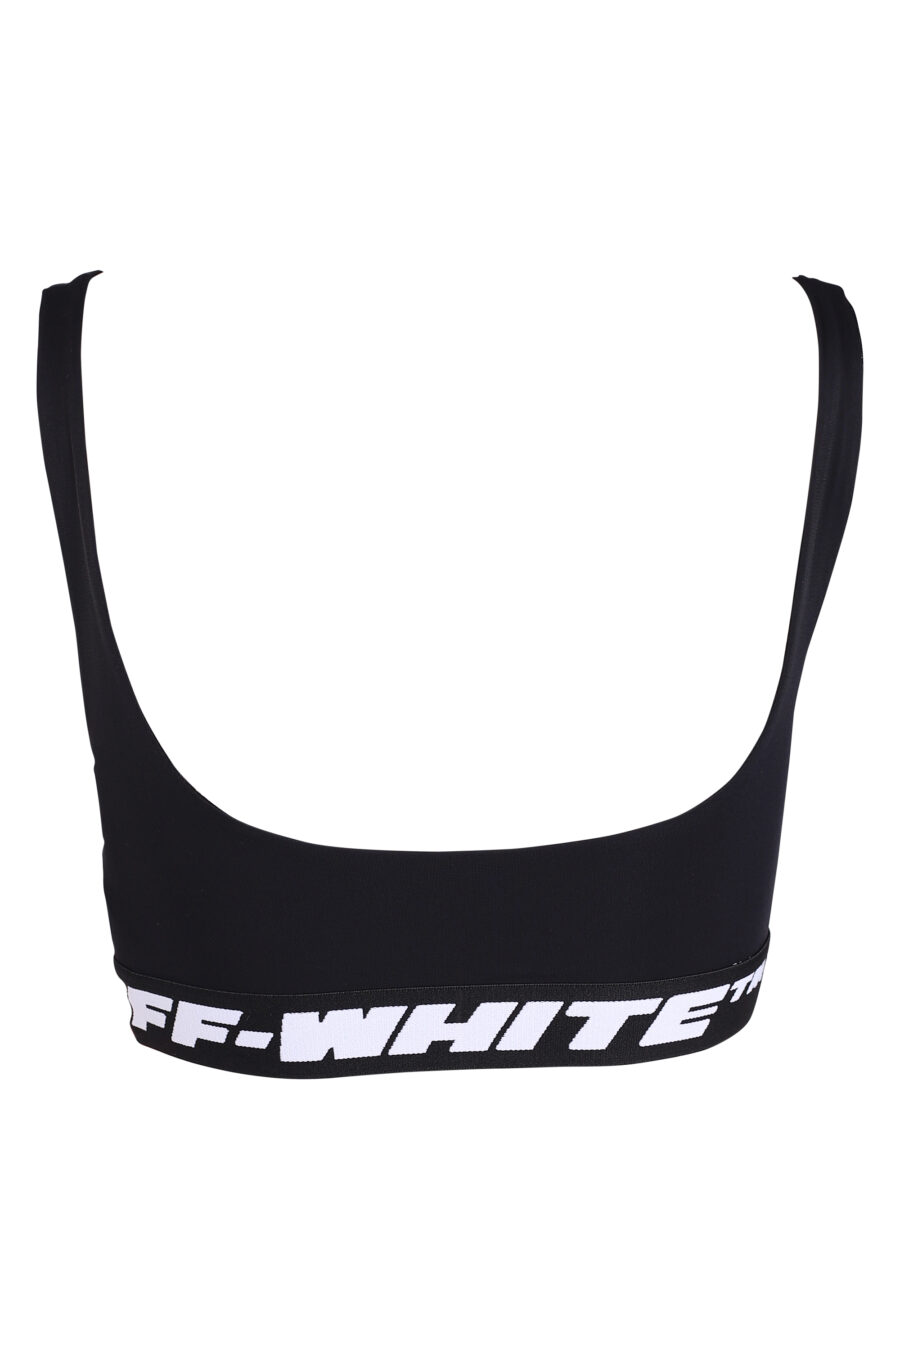 Top negro logo blanco "Band" - IMG 3406